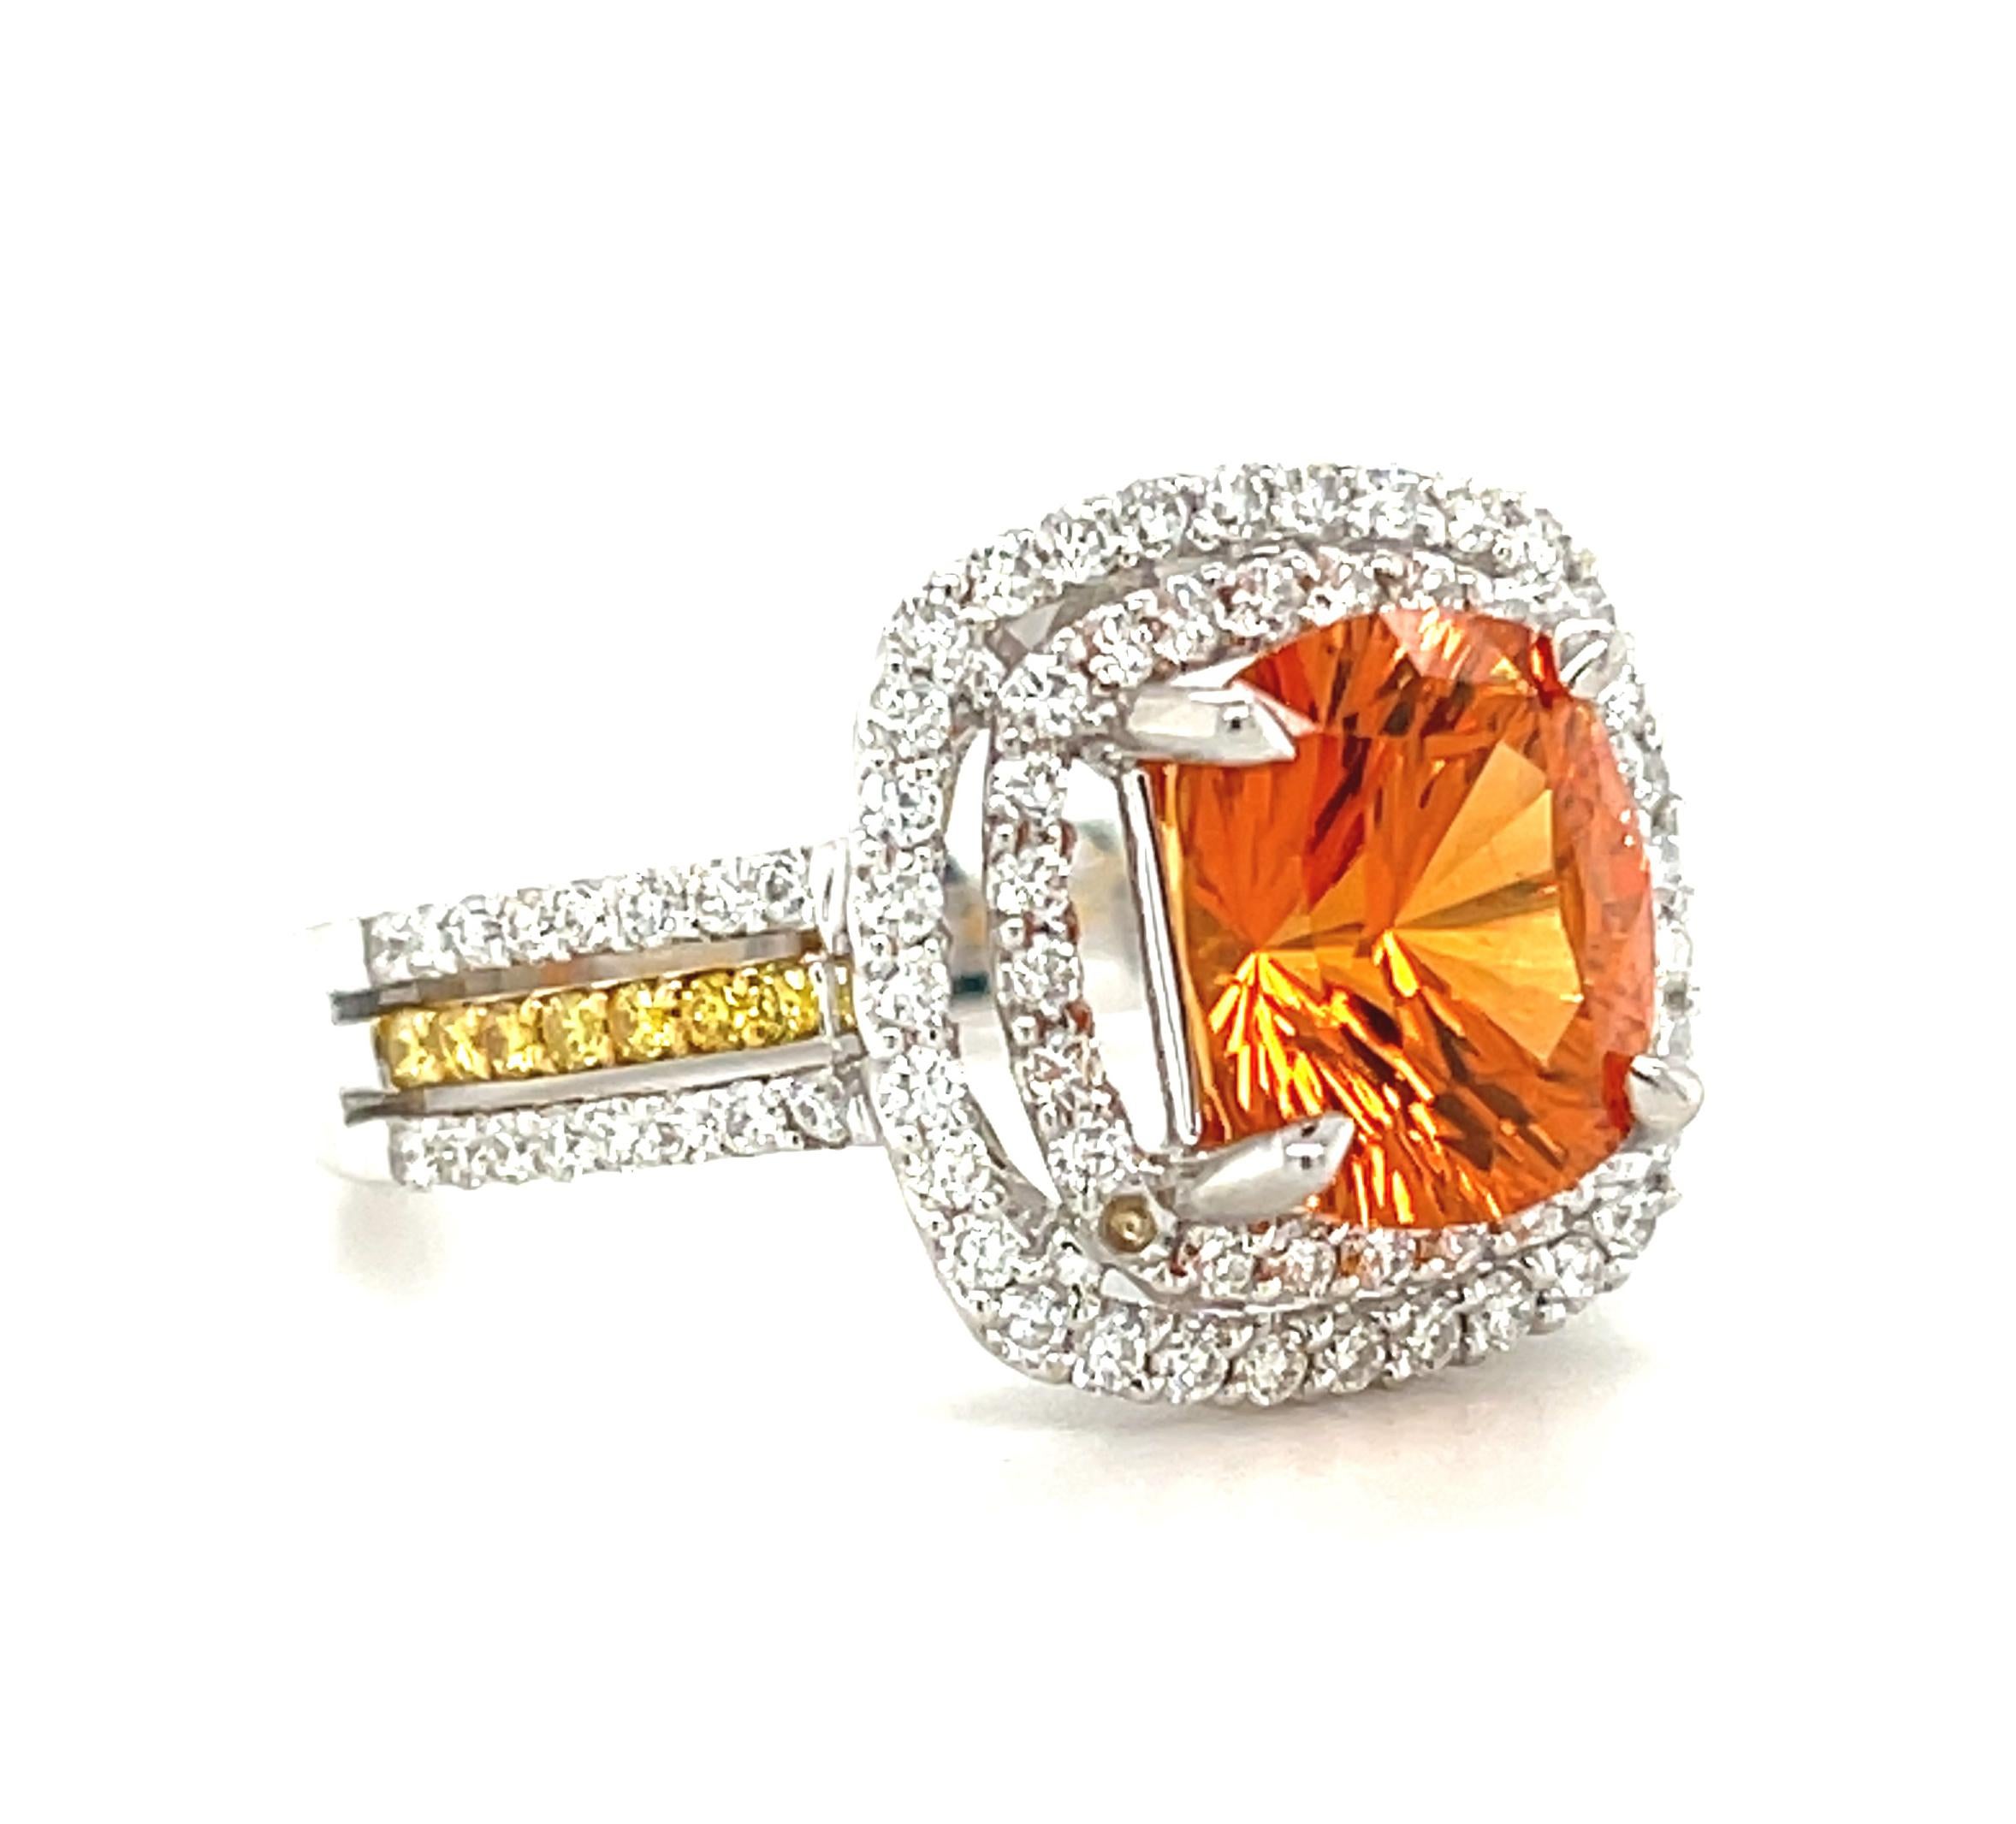 Artisan Mandarin Spessartite Garnet and Diamond Cocktail Ring in 18k Gold, 2.99 Carats For Sale